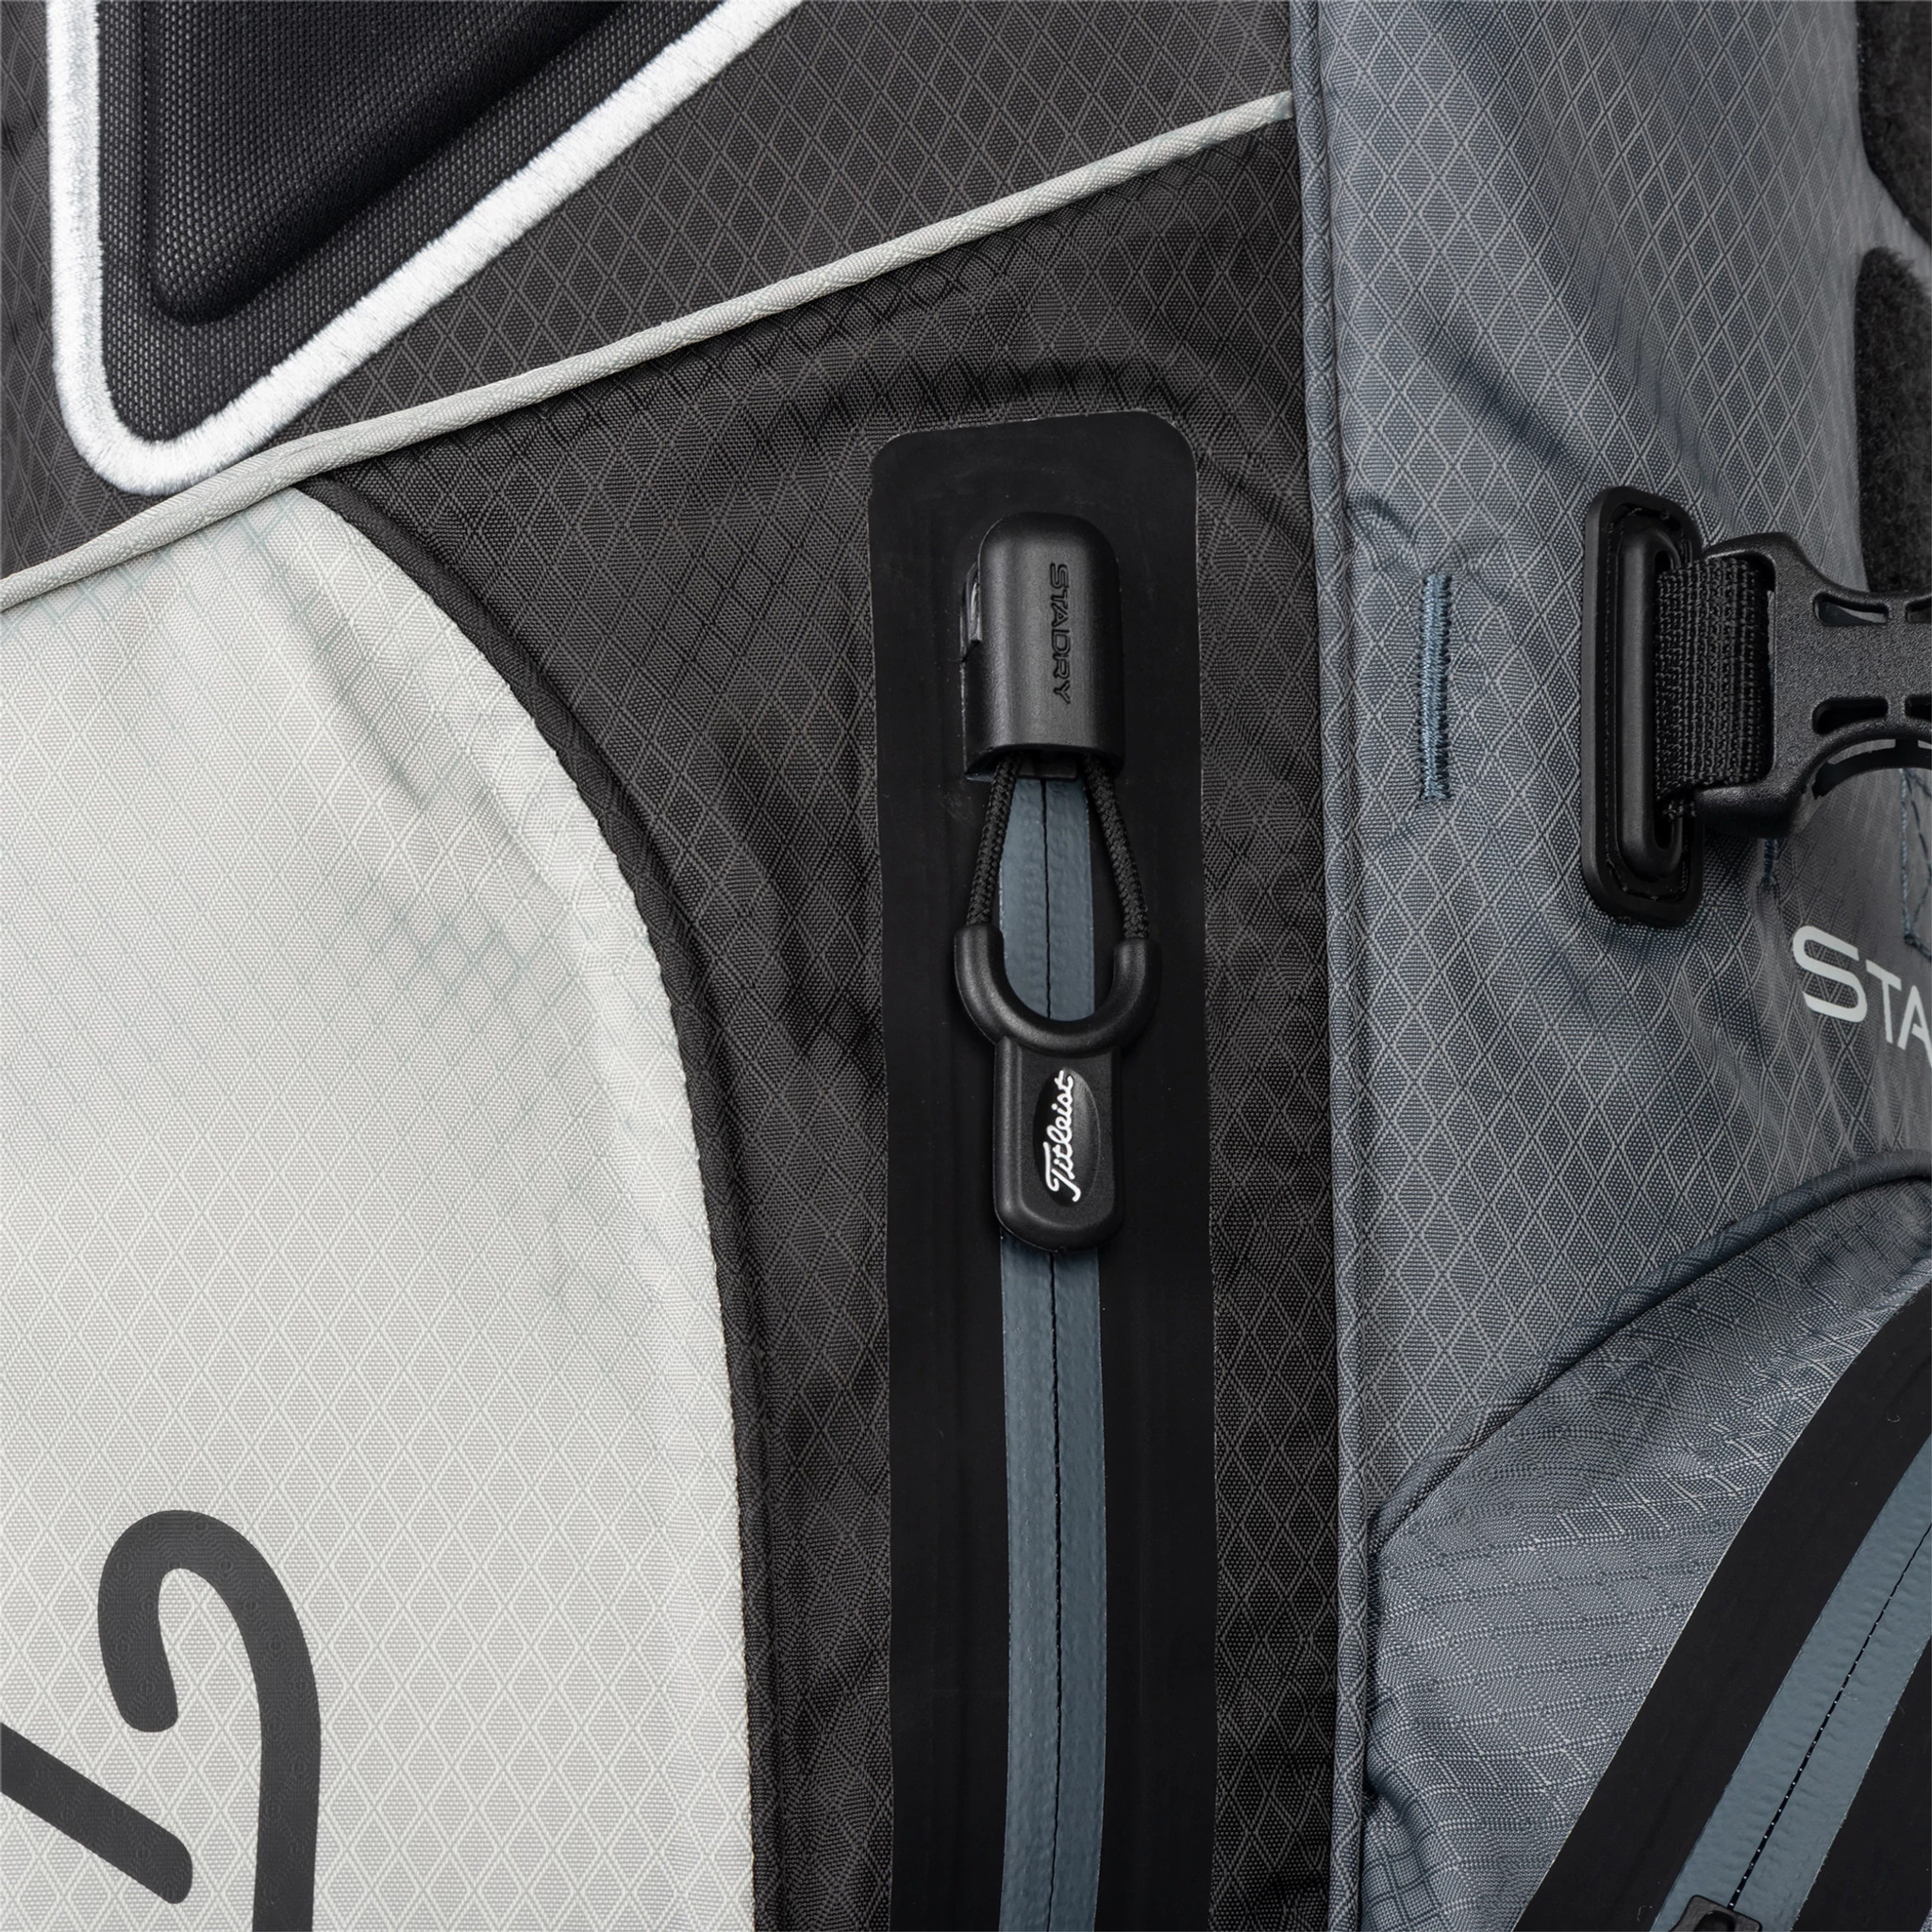 Titleist StaDry 4+ Golf Stand Golf Bag - Free Titleist Bag Towel 